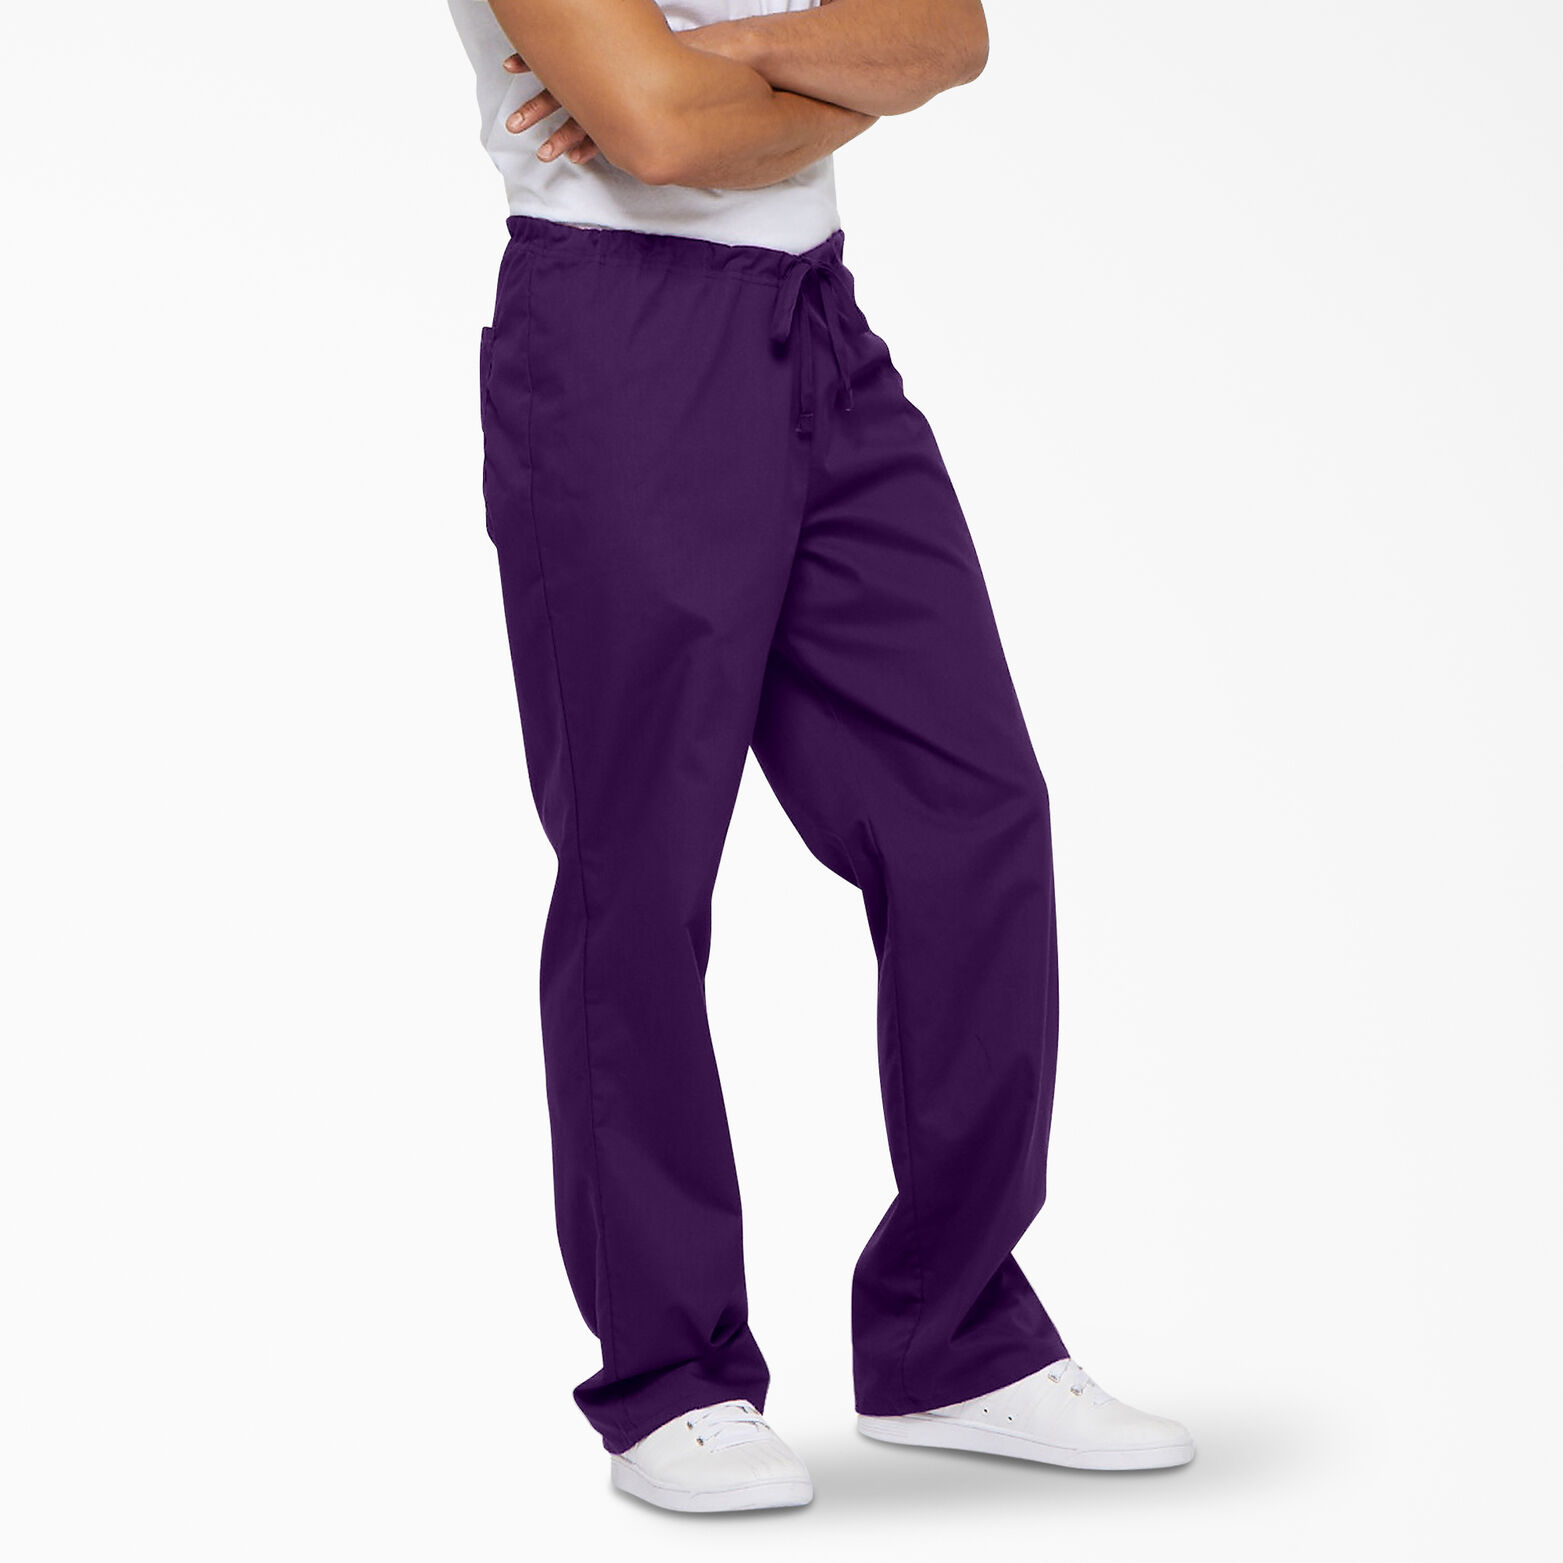 Purple Details about   Dickies Lg EDS Unisex Medical Uniform/Scrub Pants